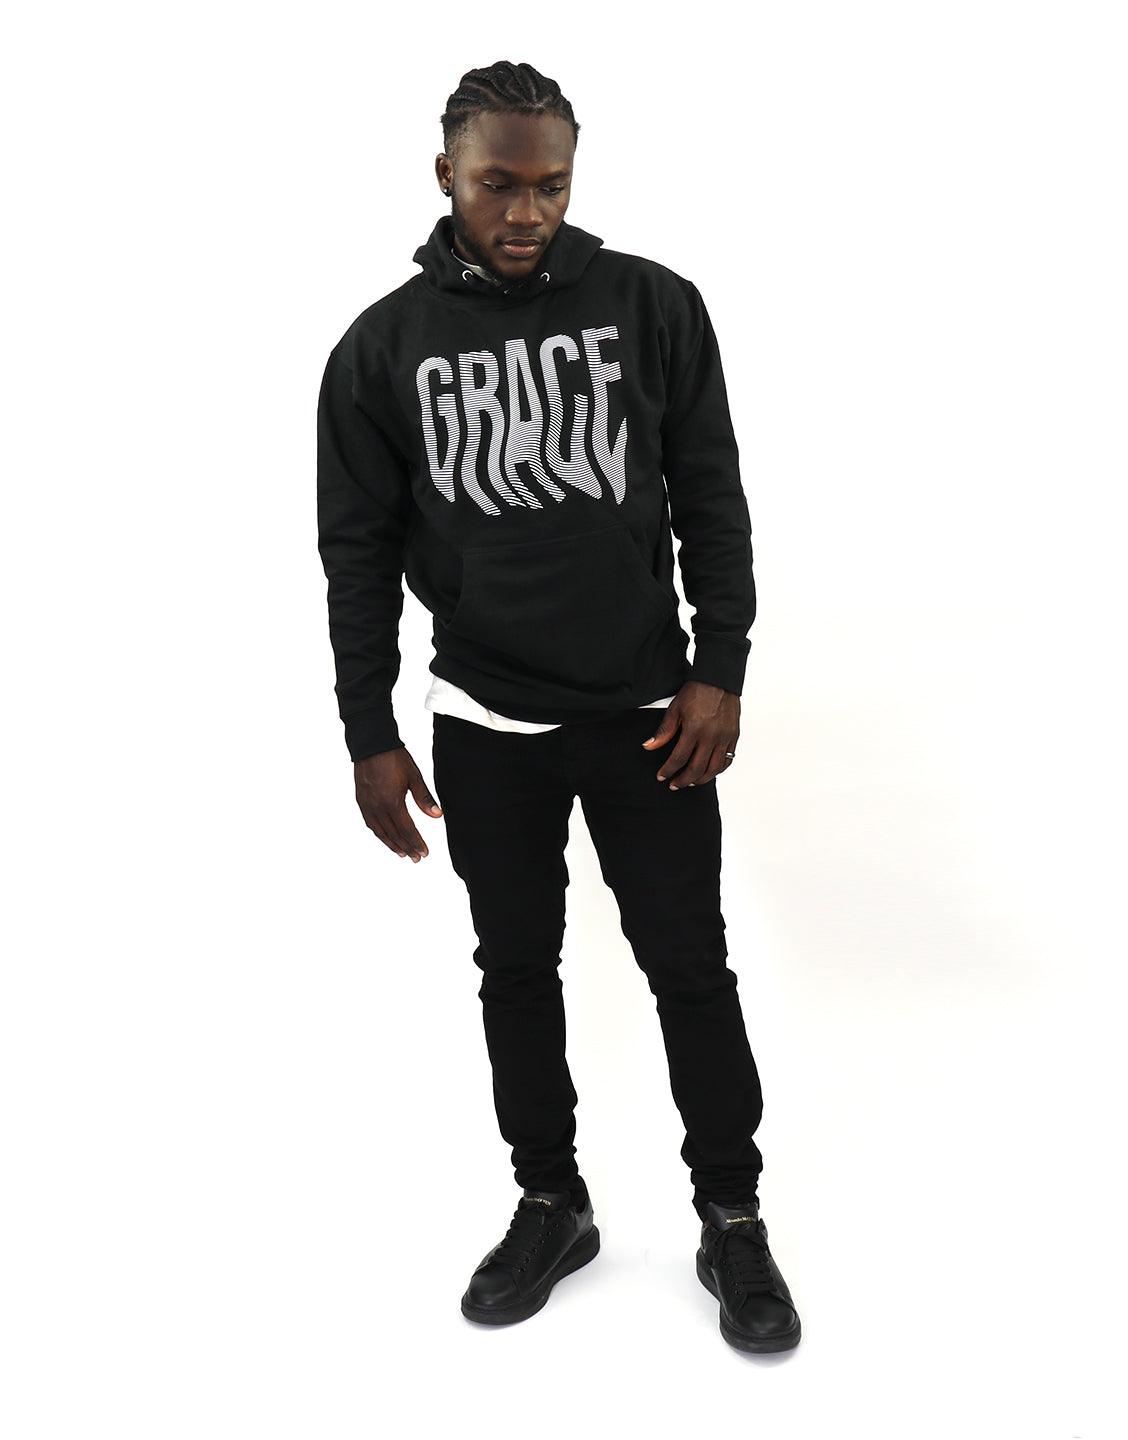 Grace Hoodie - Black - VOTC Clothing